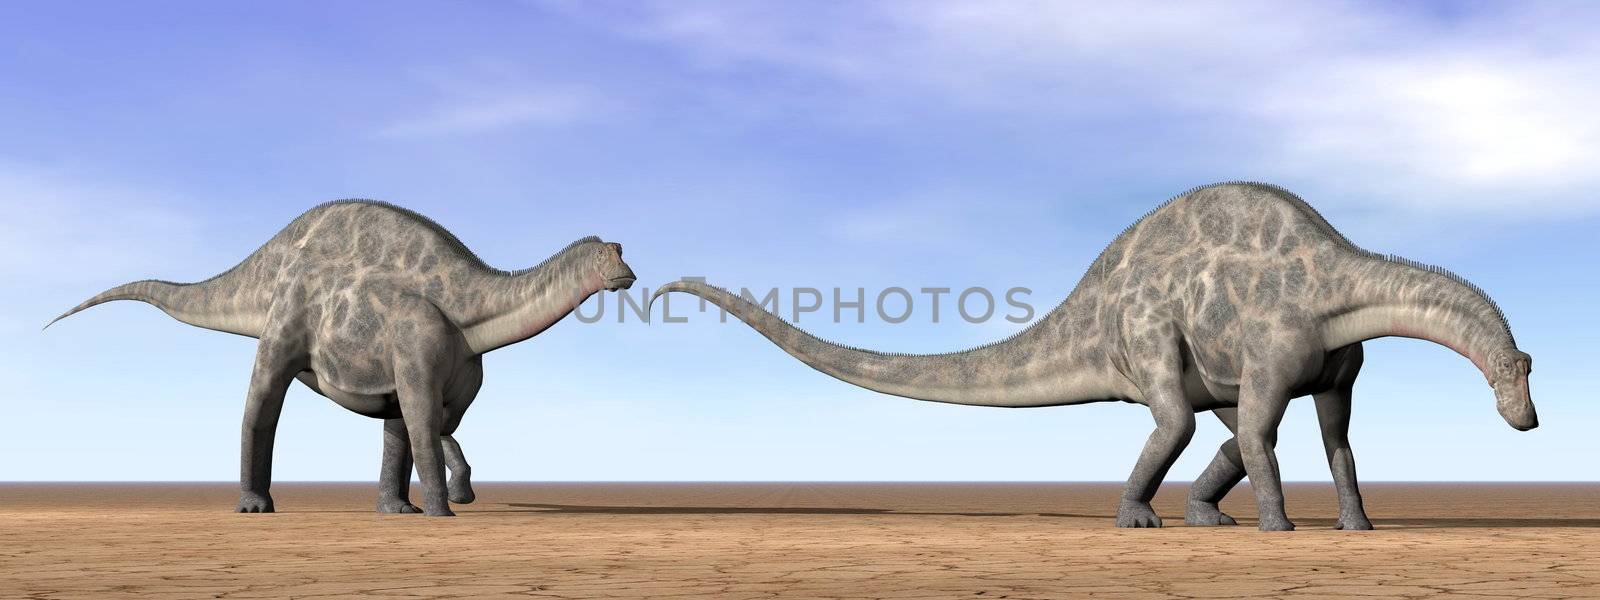 Dicraeosaurus dinosaurs in the desert - 3D render by Elenaphotos21